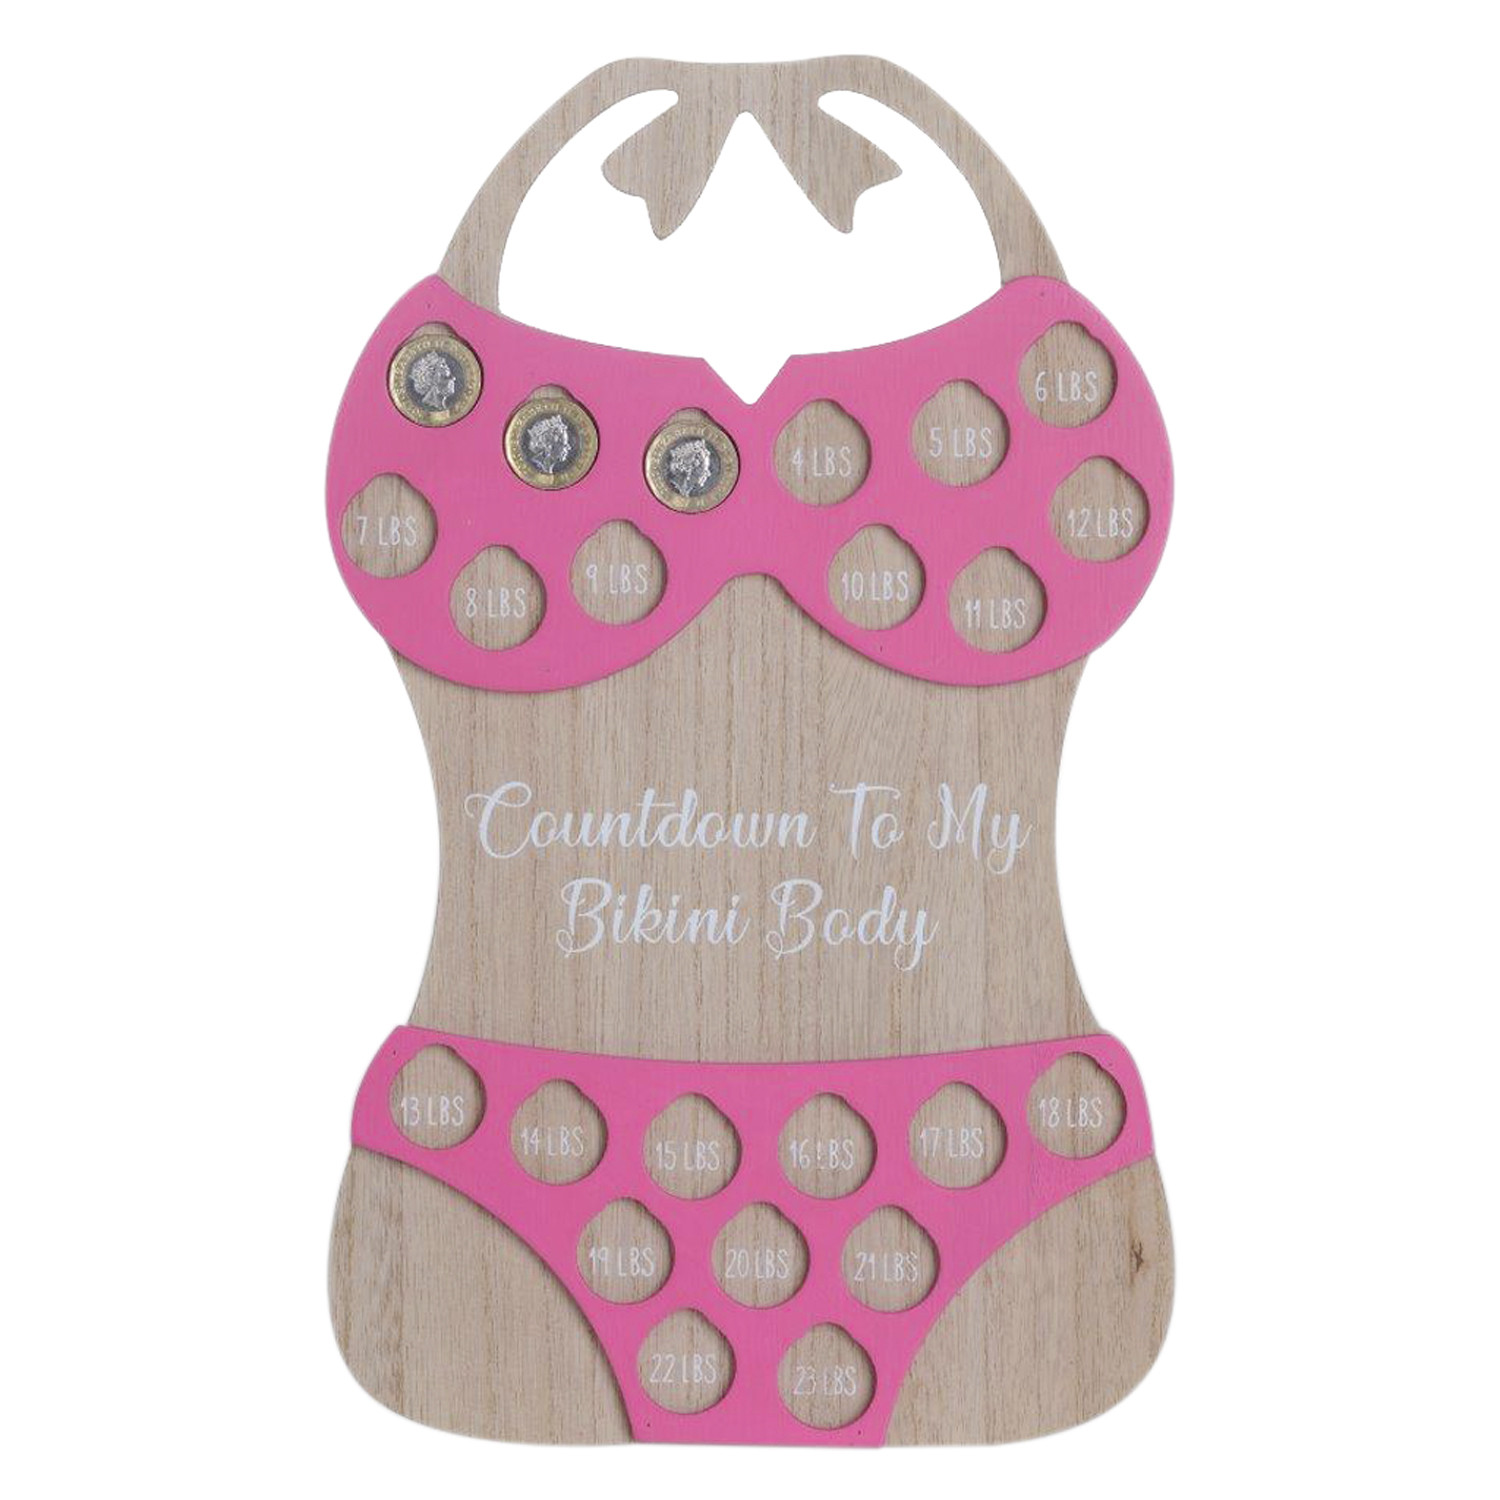 Bikini Body Pound Countdown Plaque Image